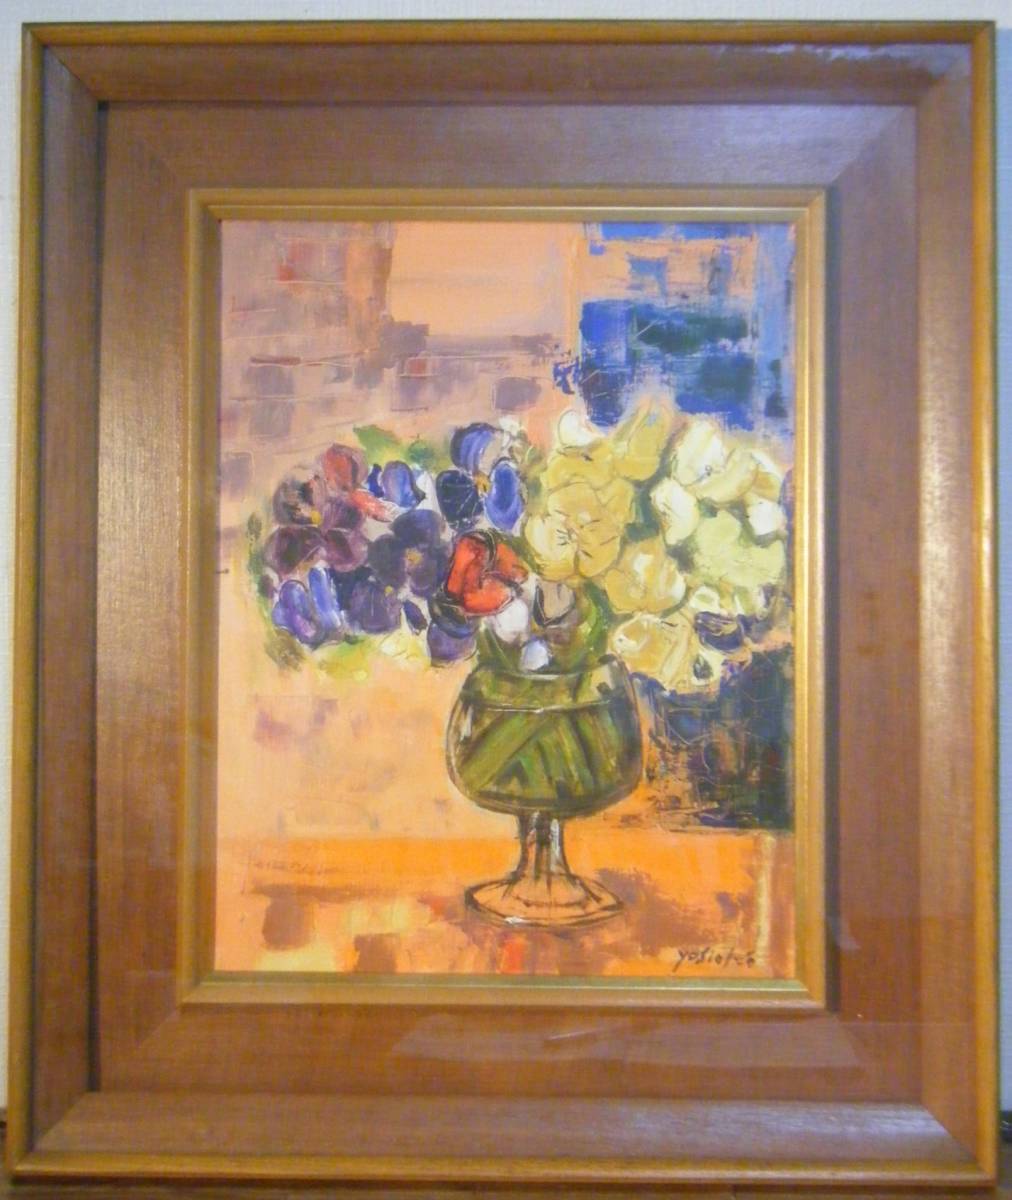 Painting Yoshio.Ito Oil Painting No.6 Flower Masterpiece P165, Painting, Oil painting, Still life